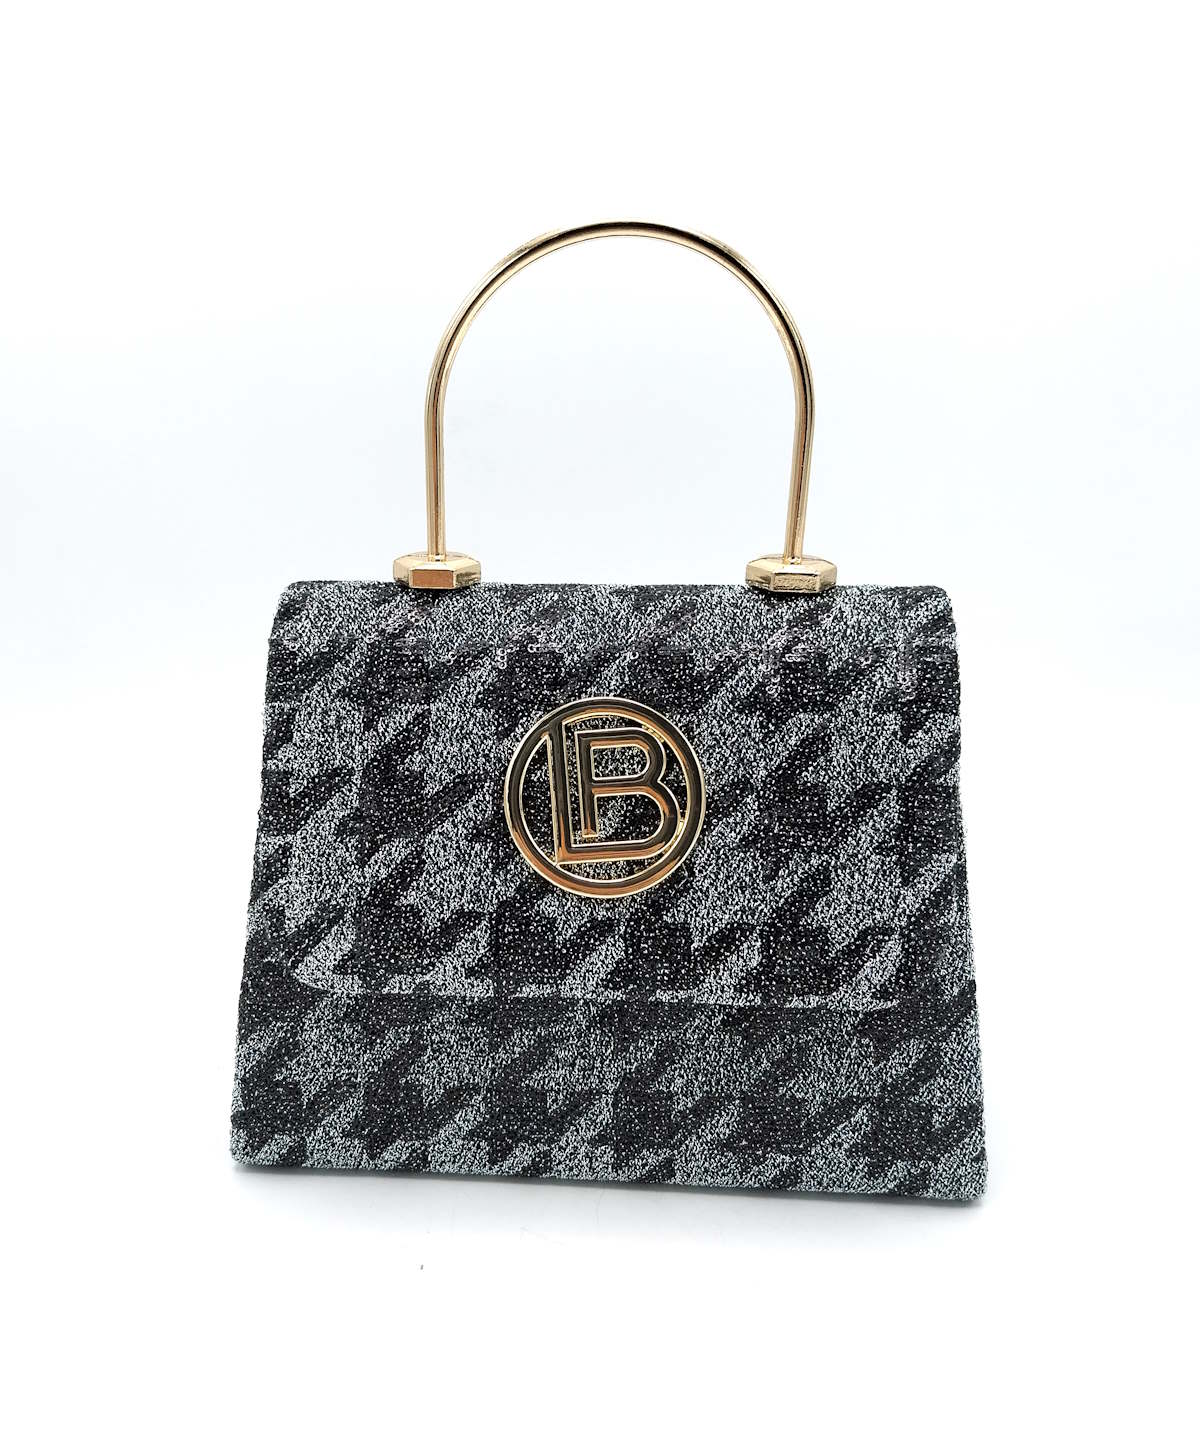 Clutch chain bag, Brand Laura Biagiotti, art. LB23W-303